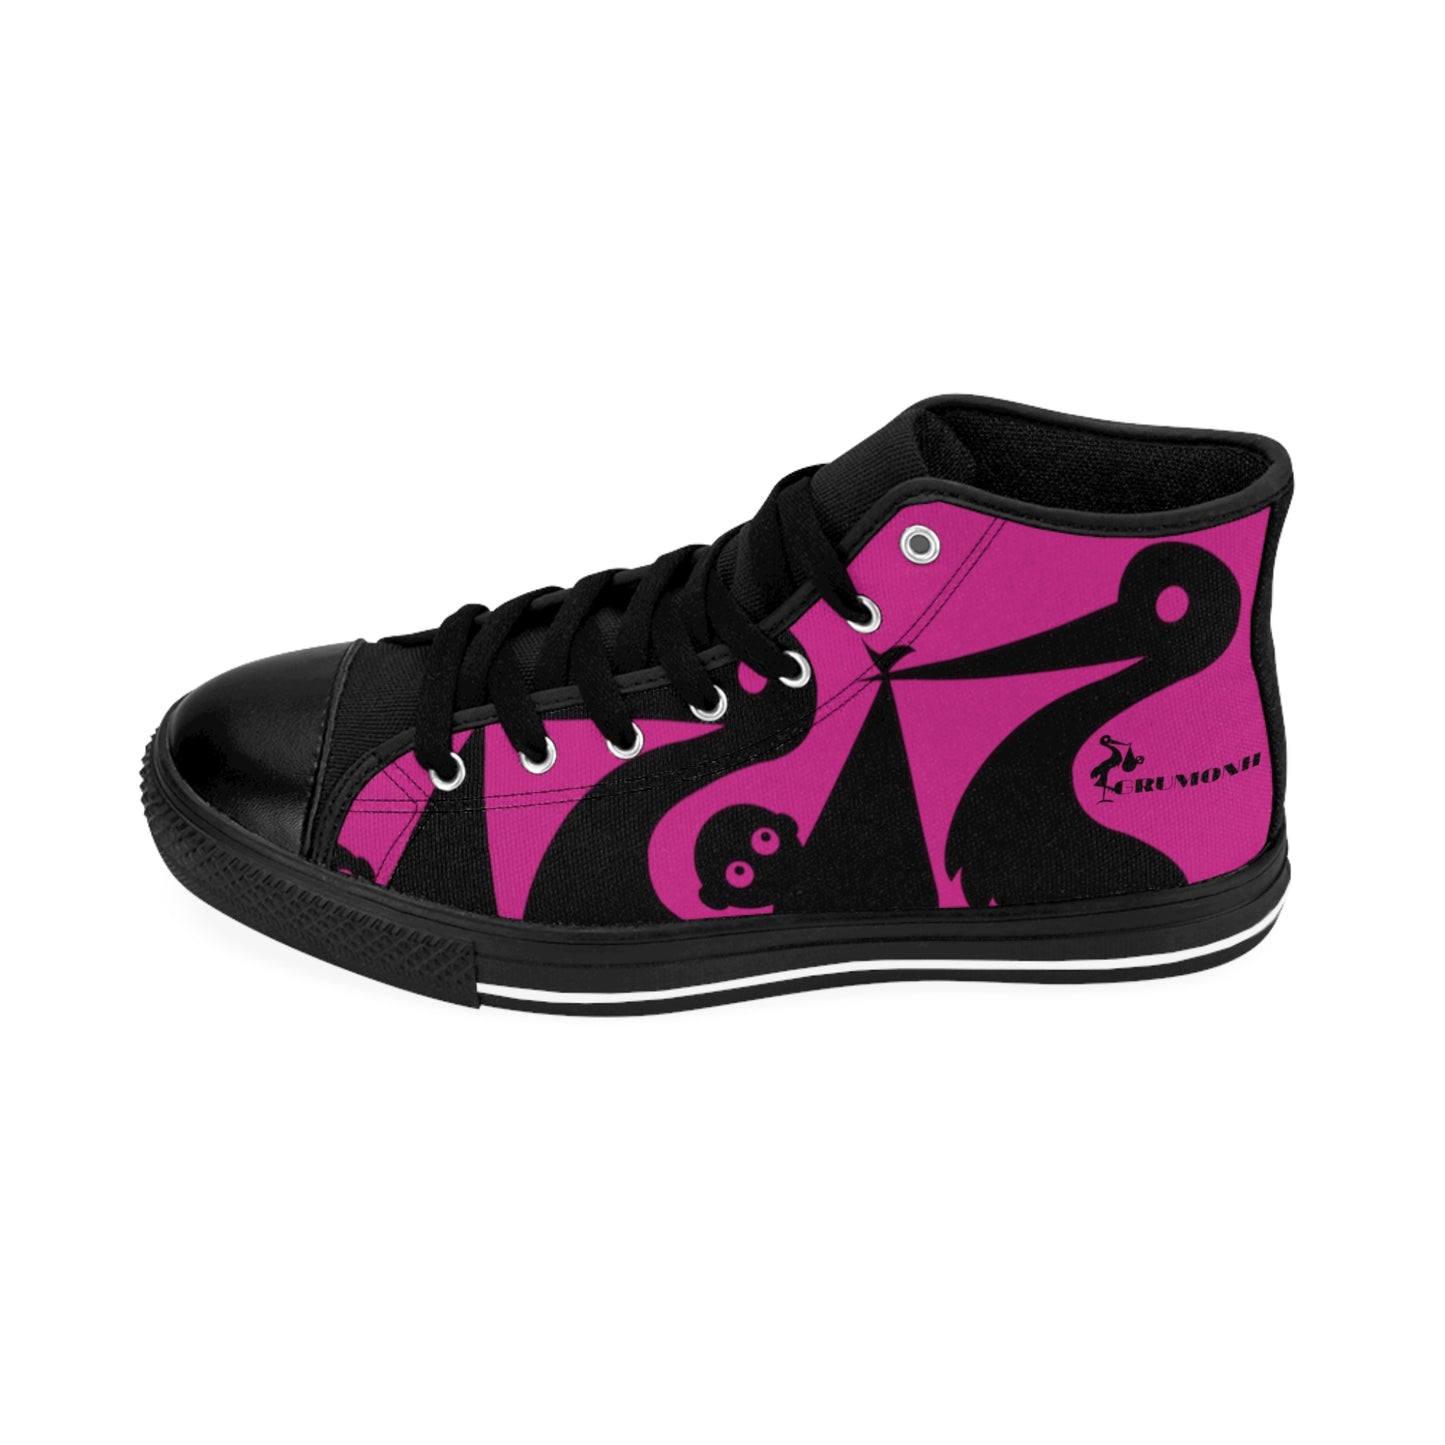 GRUMONH Men's Classic Sneakers Pink